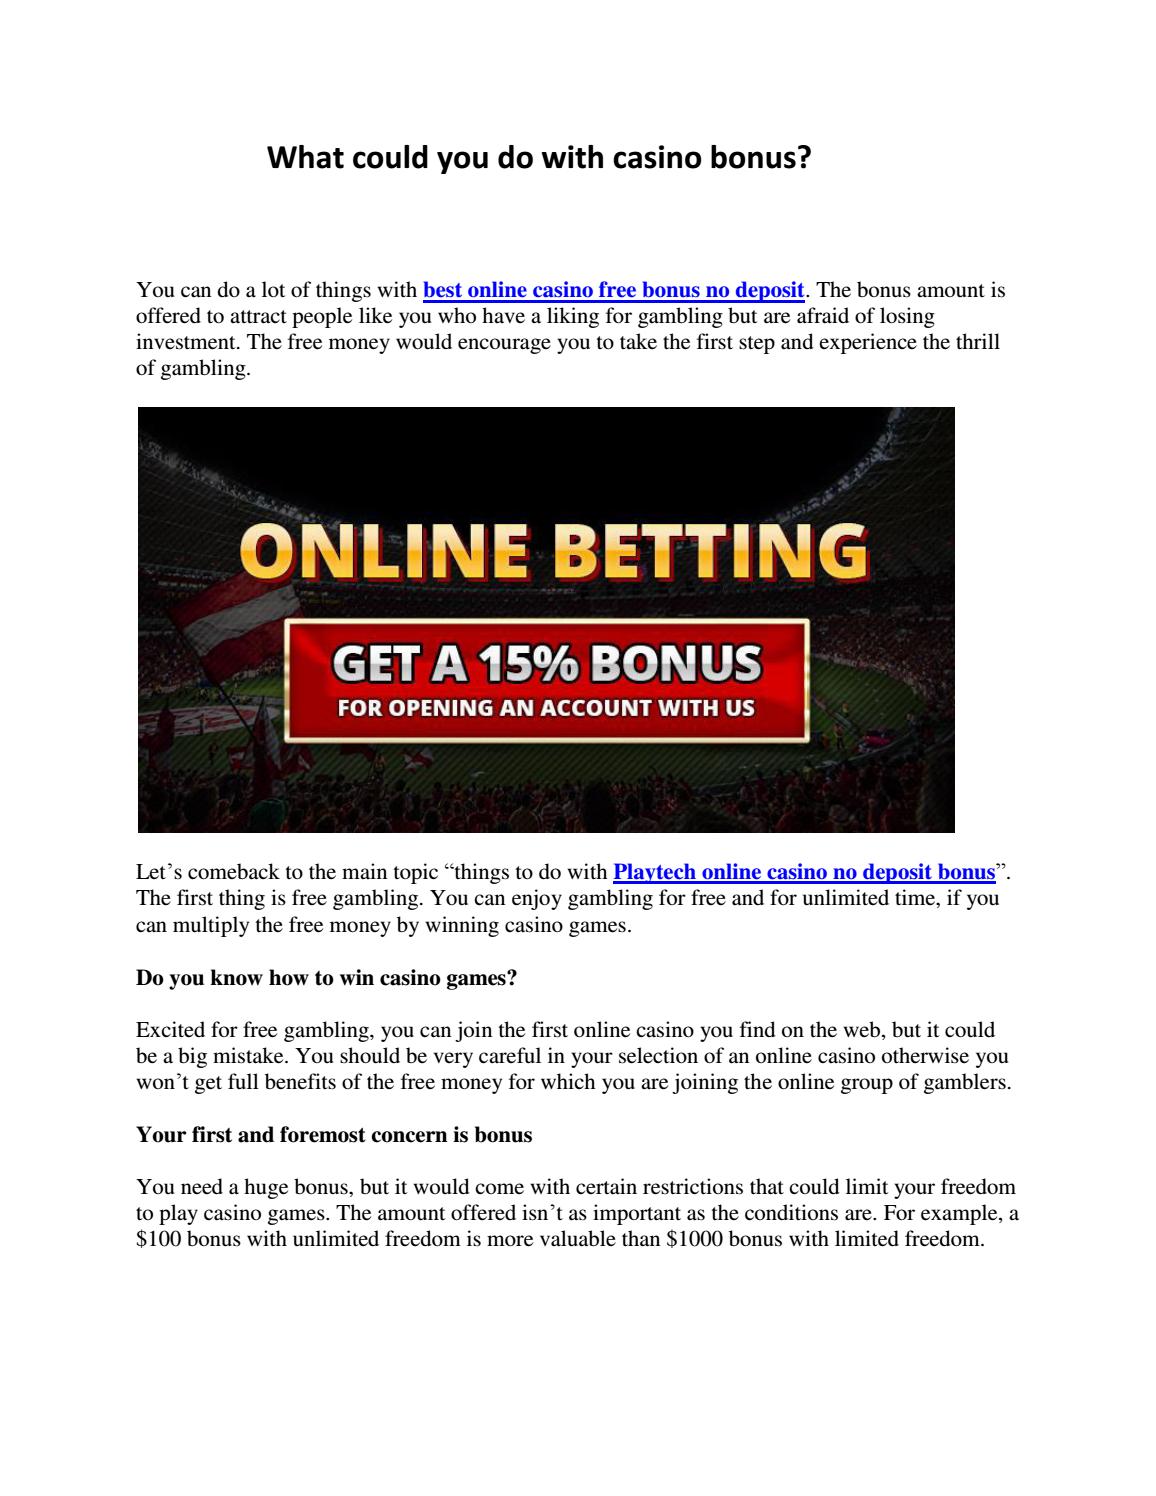 Free gambling money for online casino